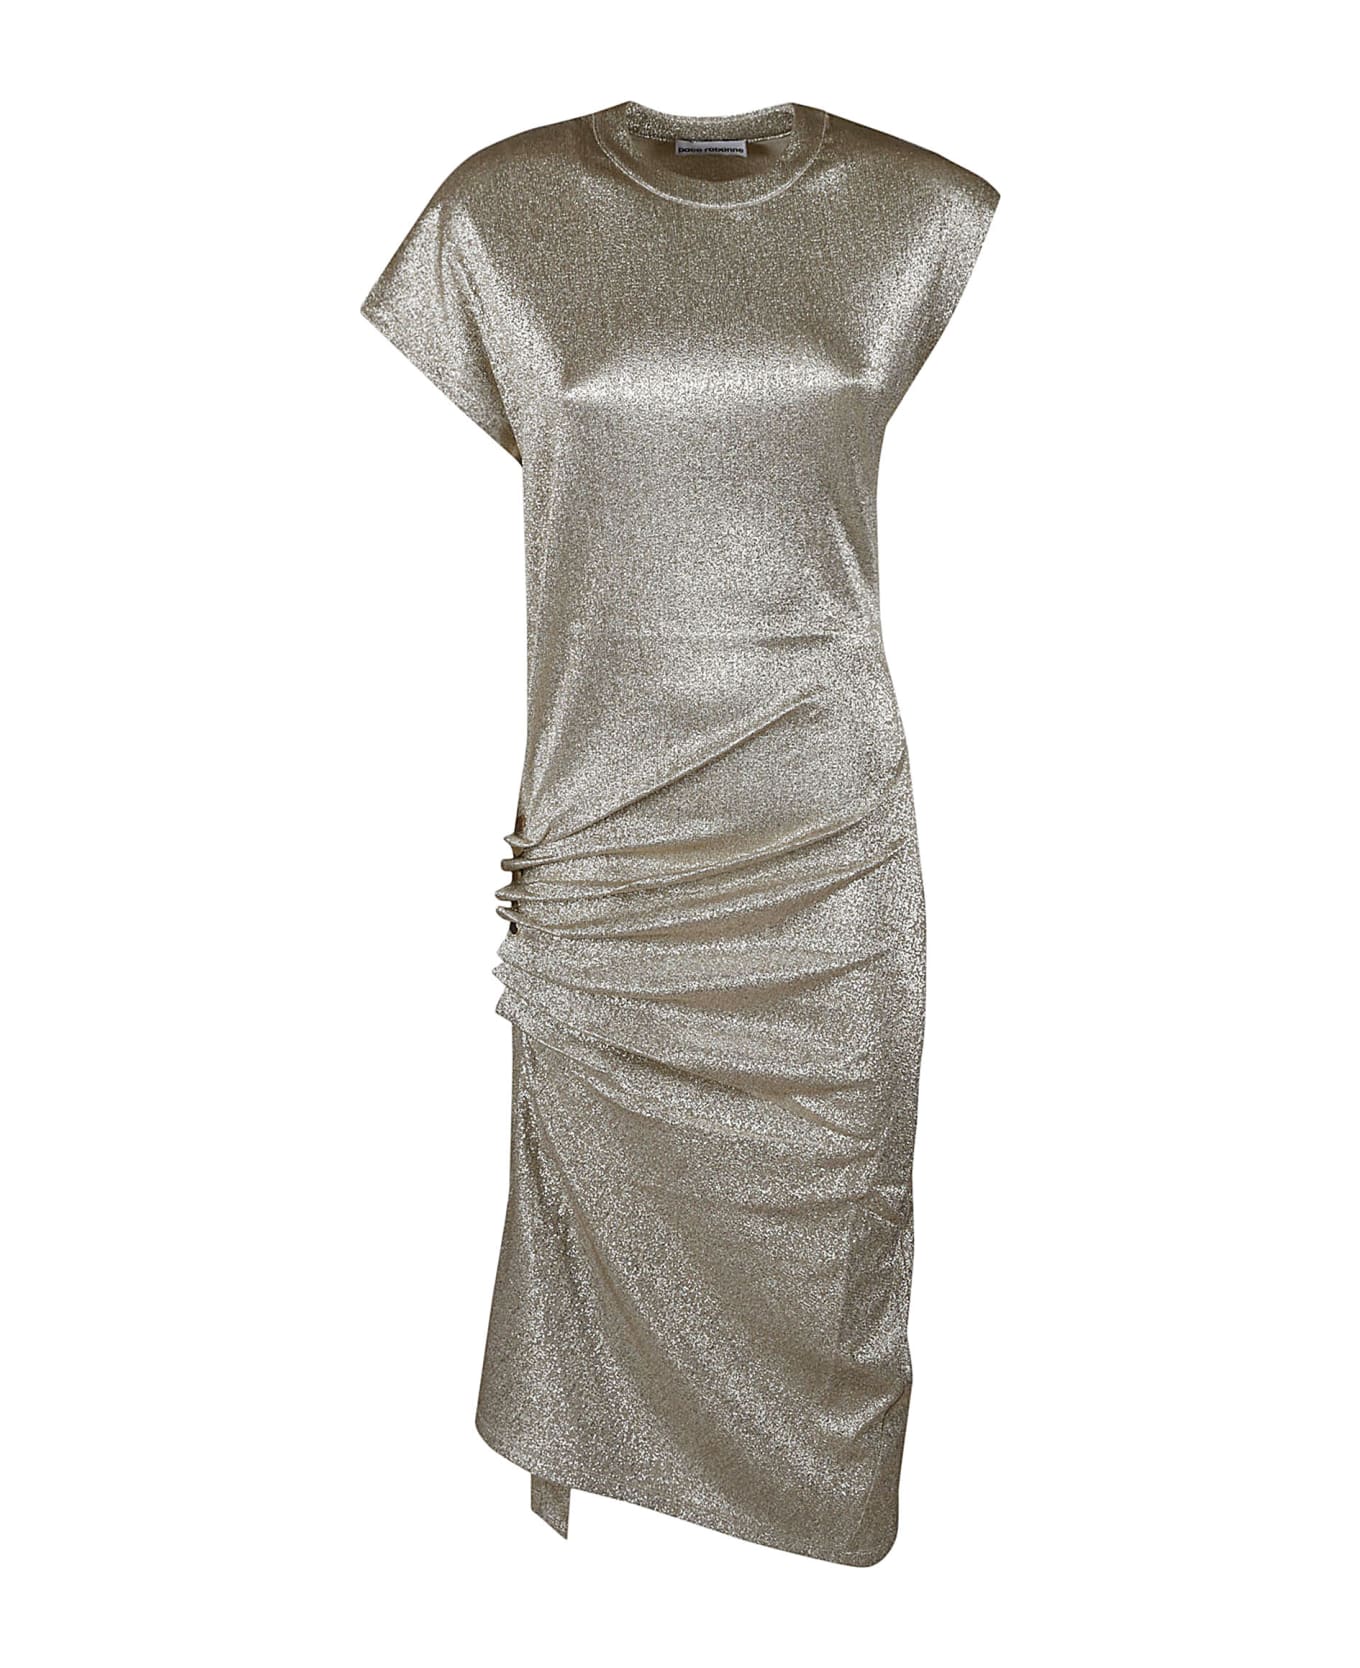 Paco Rabanne Metallic Gathered Dress - Silver/Gold